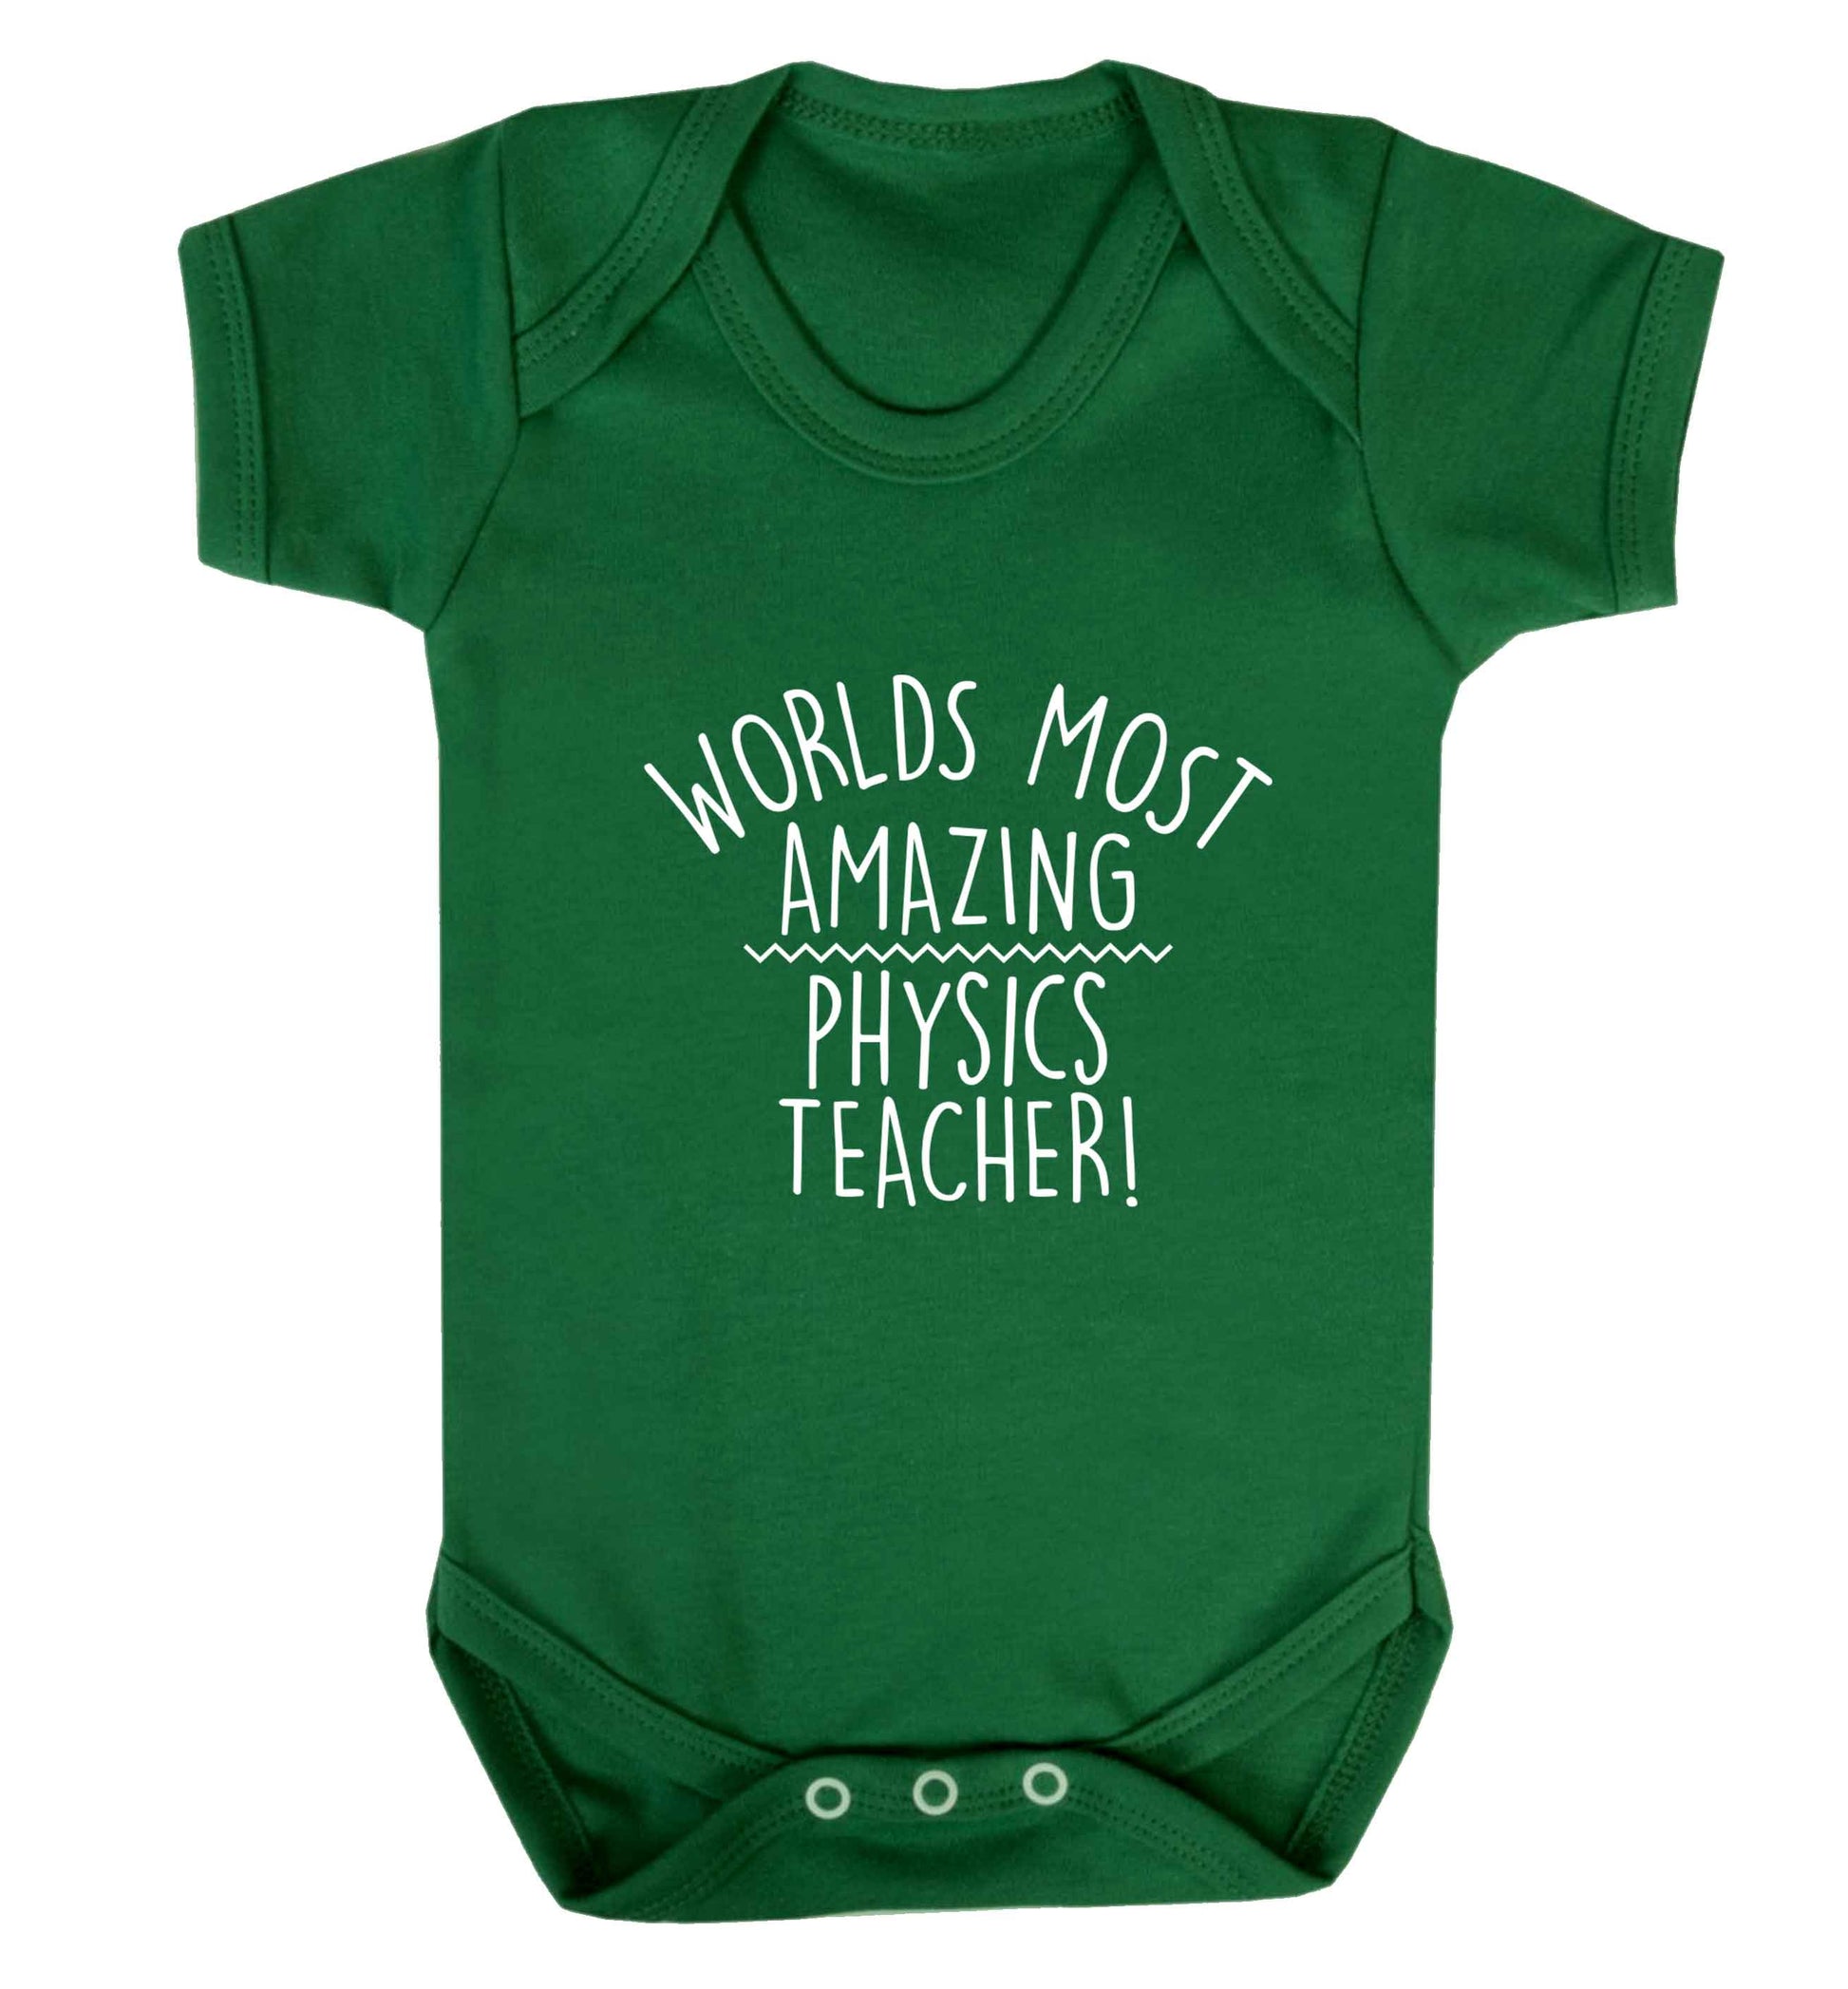 Worlds most amazing physics teacher baby vest green 18-24 months